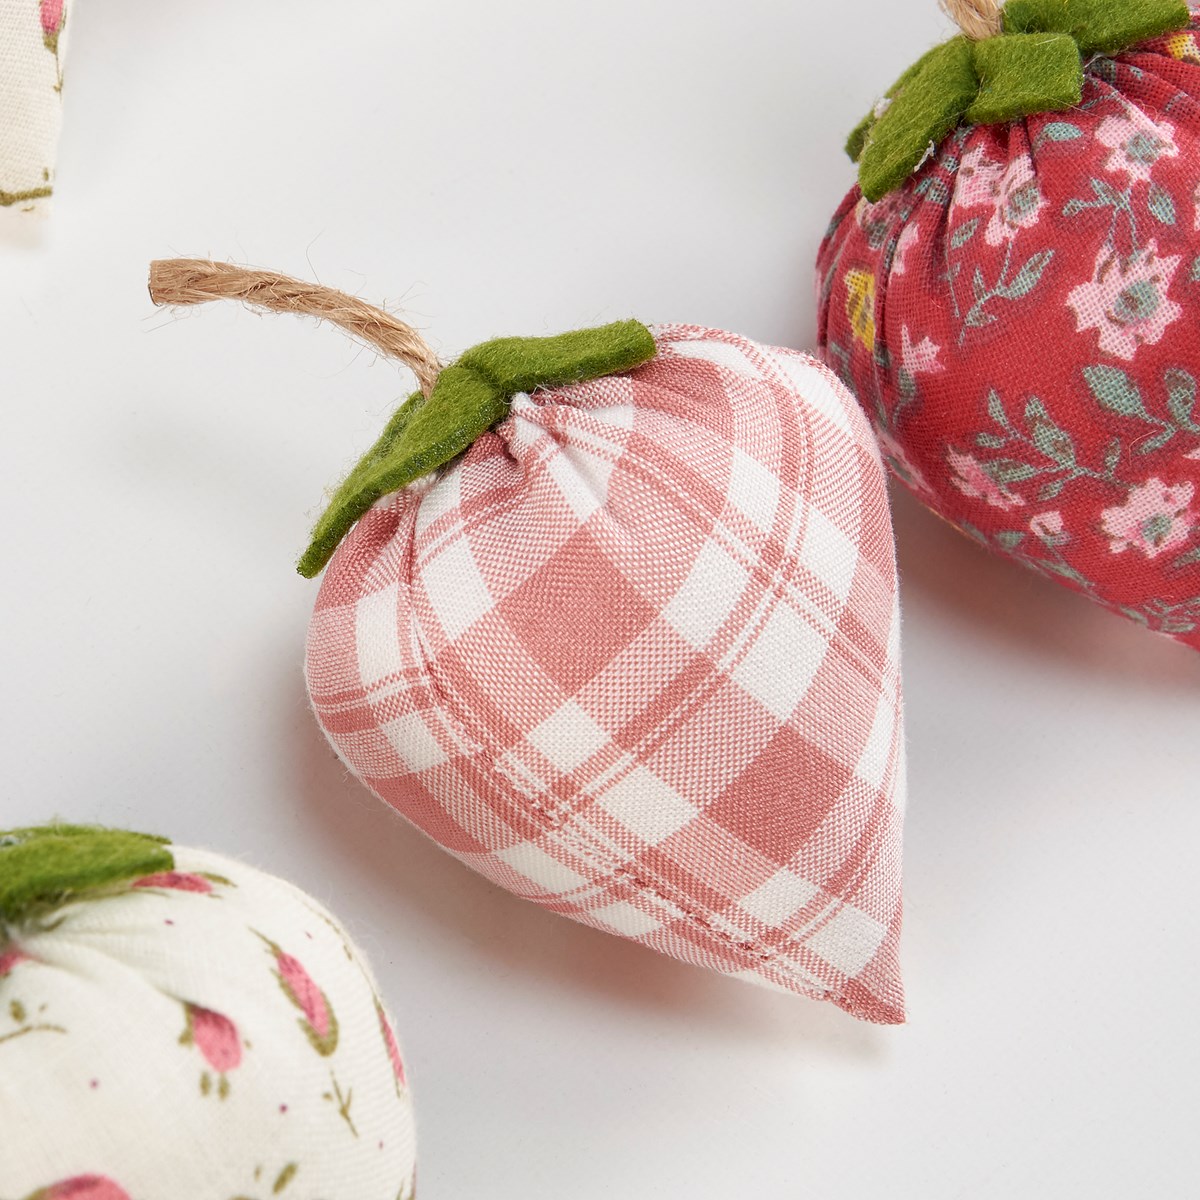 Fabric Strawberries In Basket  - Cotton, Jute, Felt